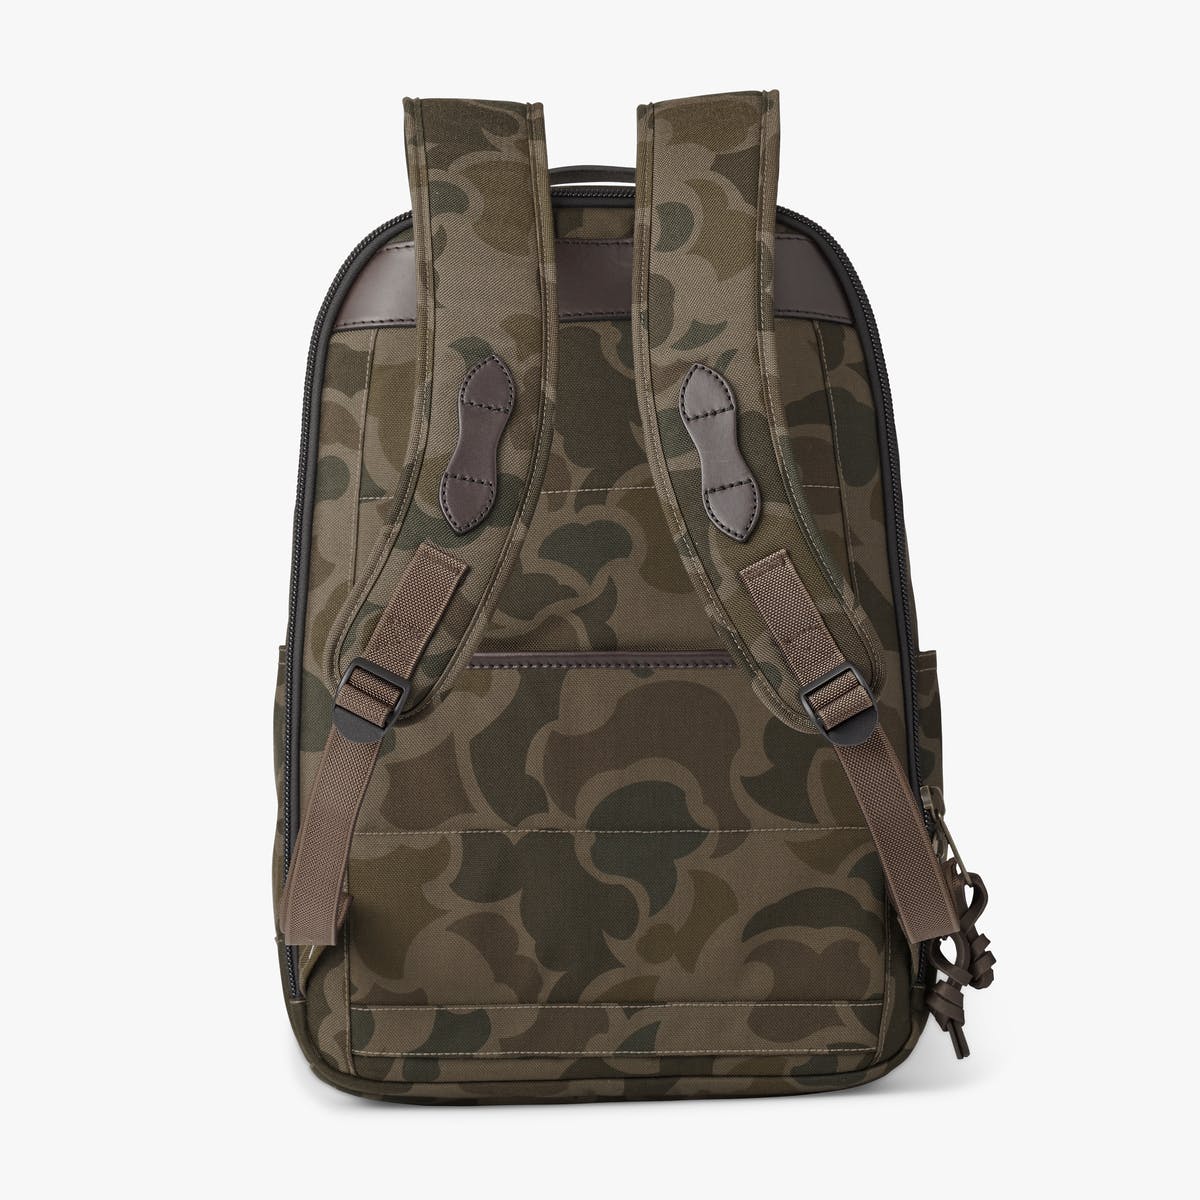 Filson "Dryden Backpack in Camo print"